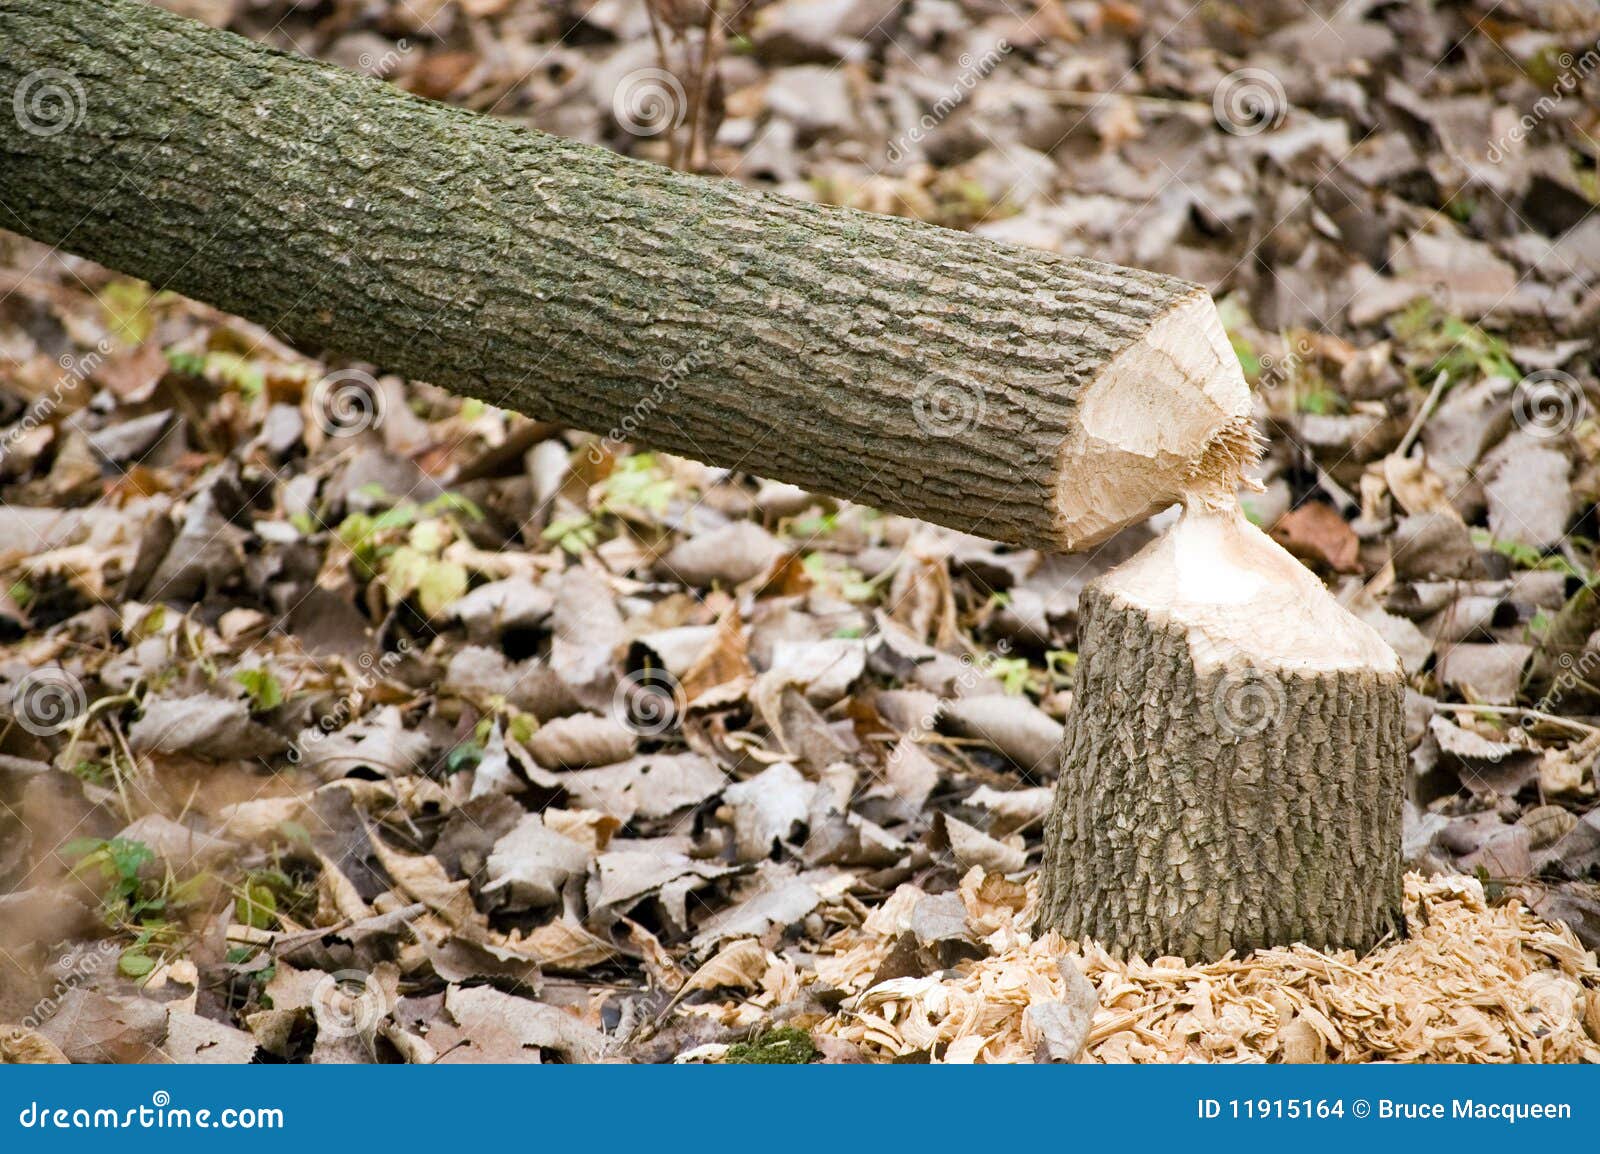 beaver-tree-damage-11915164.jpg